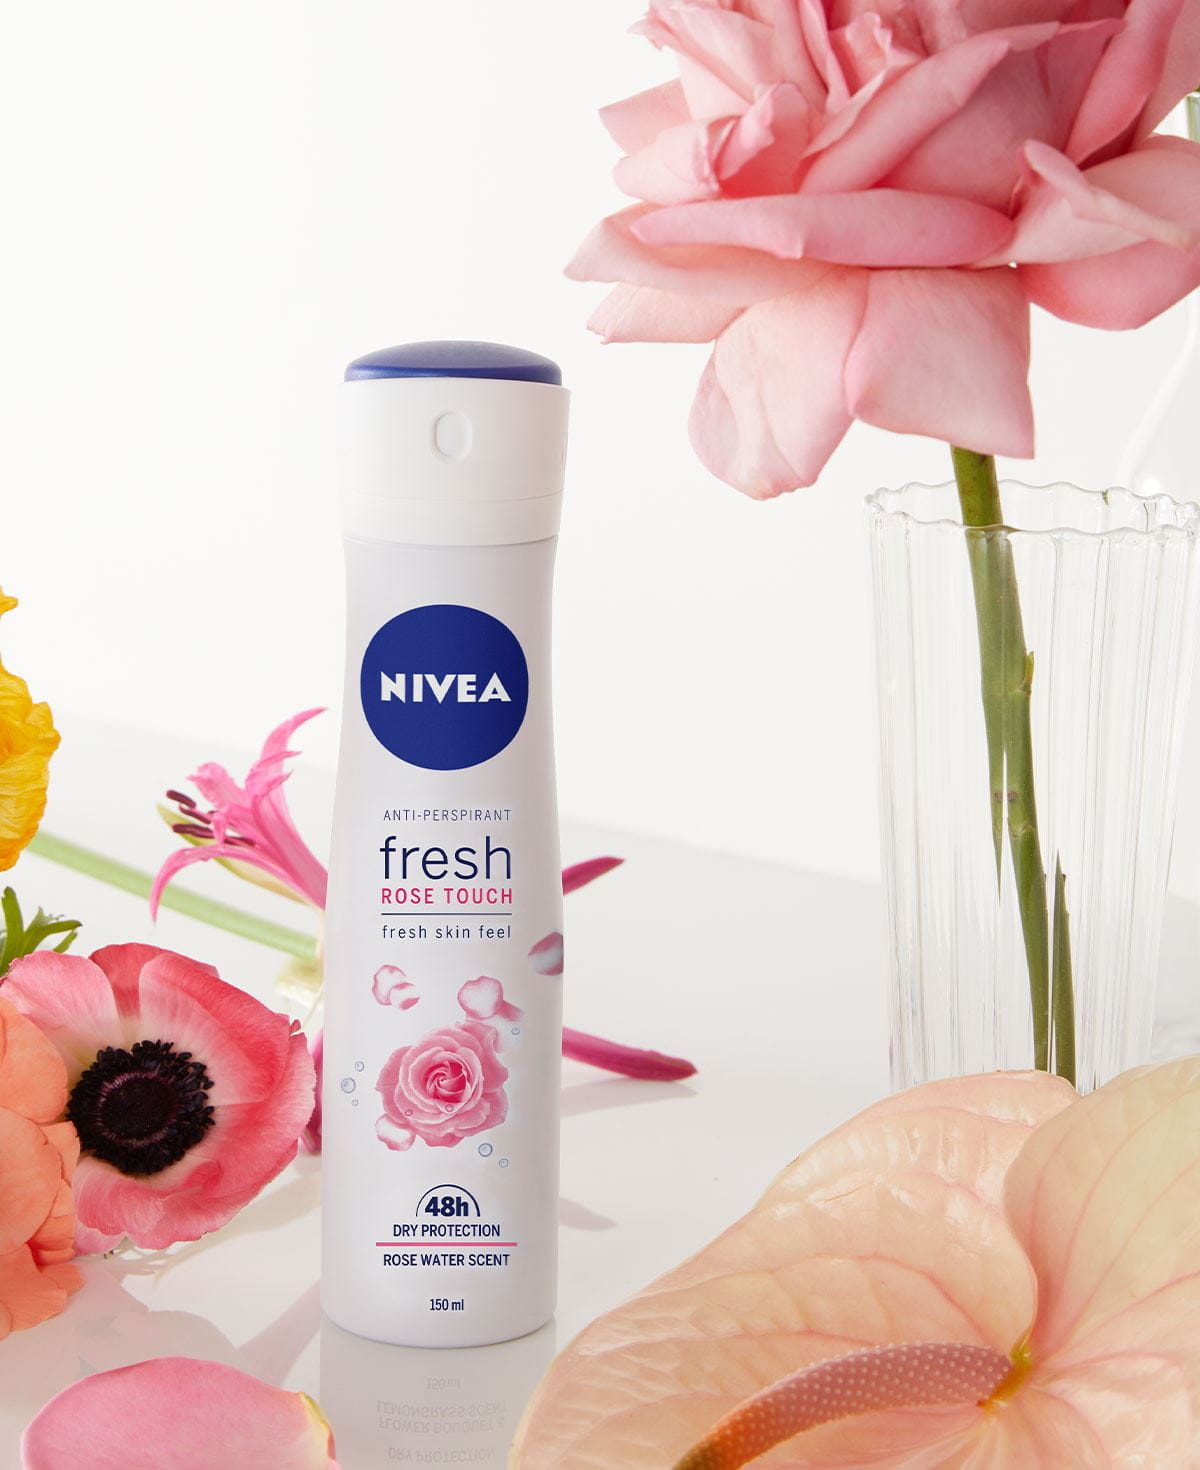 NIVEA Fresh Rose Touch dezodorans okružen cvijećem.